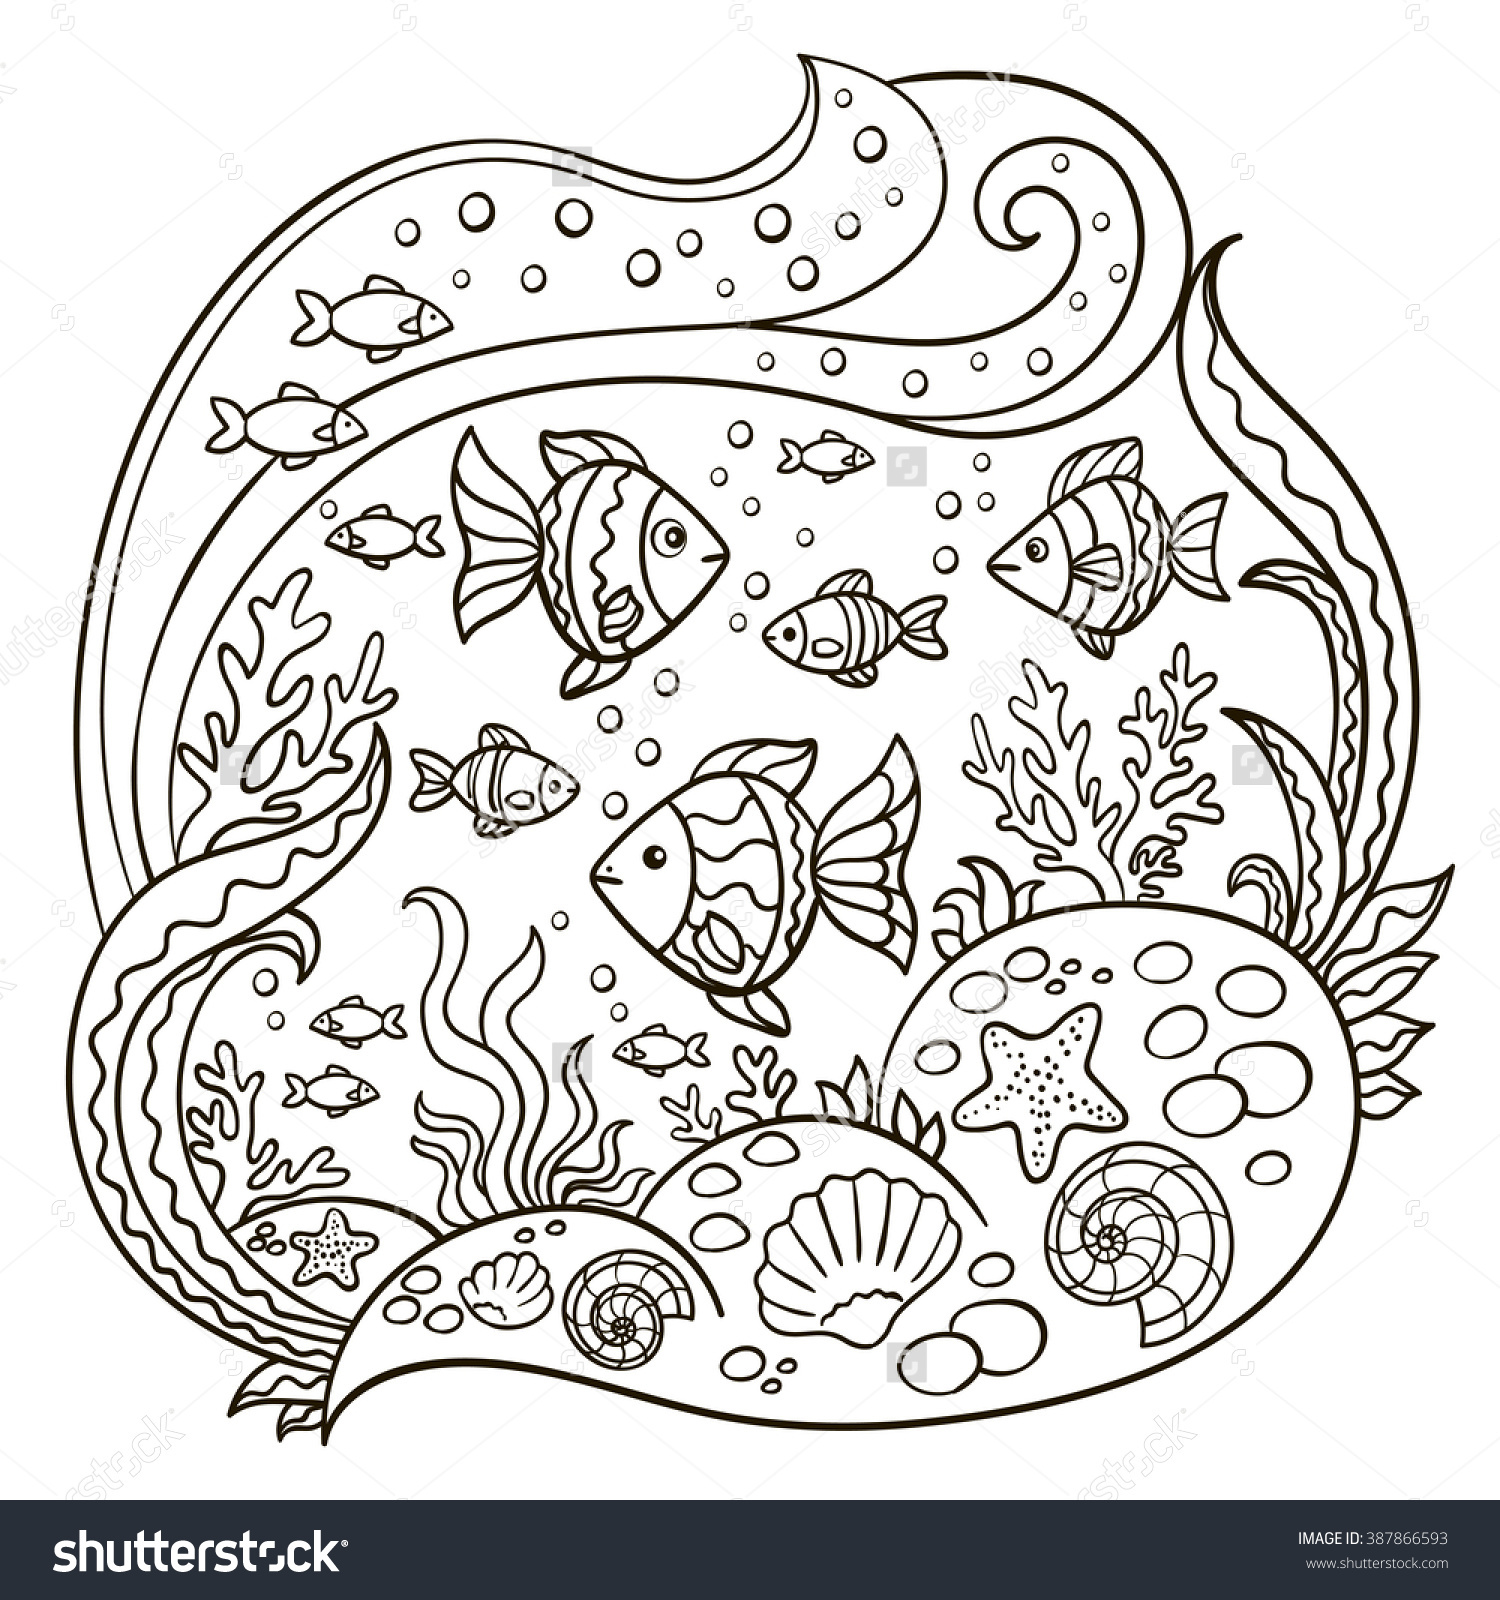 Sea Bed coloring #1, Download drawings